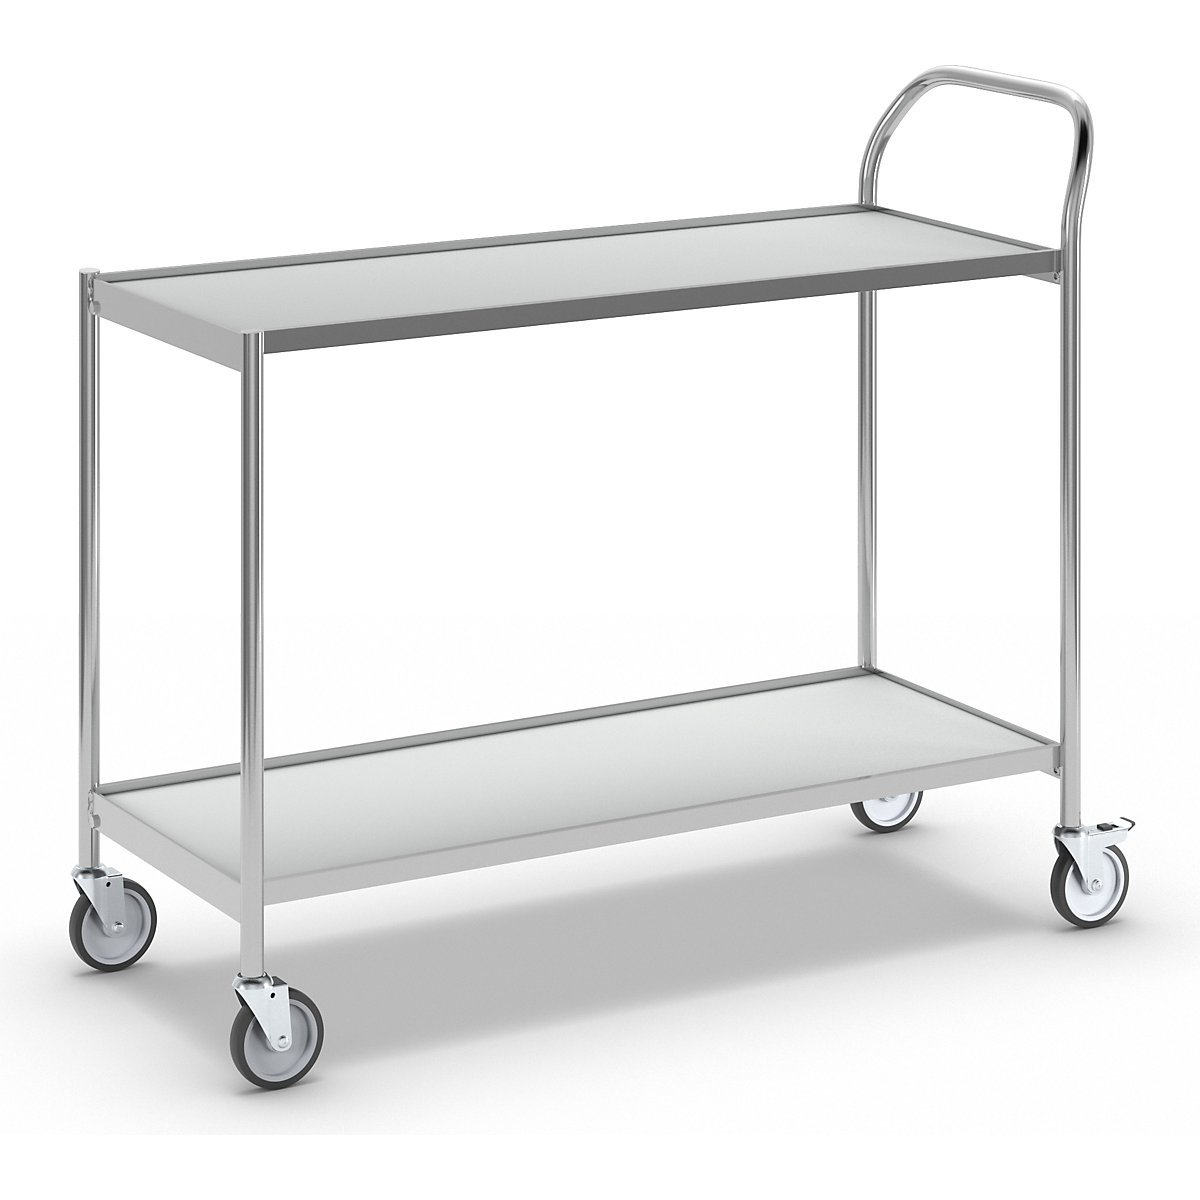 Stolový vozík – HelgeNyberg, 2 etáže, d x š 1000 x 420 mm, chrom / šedá-6